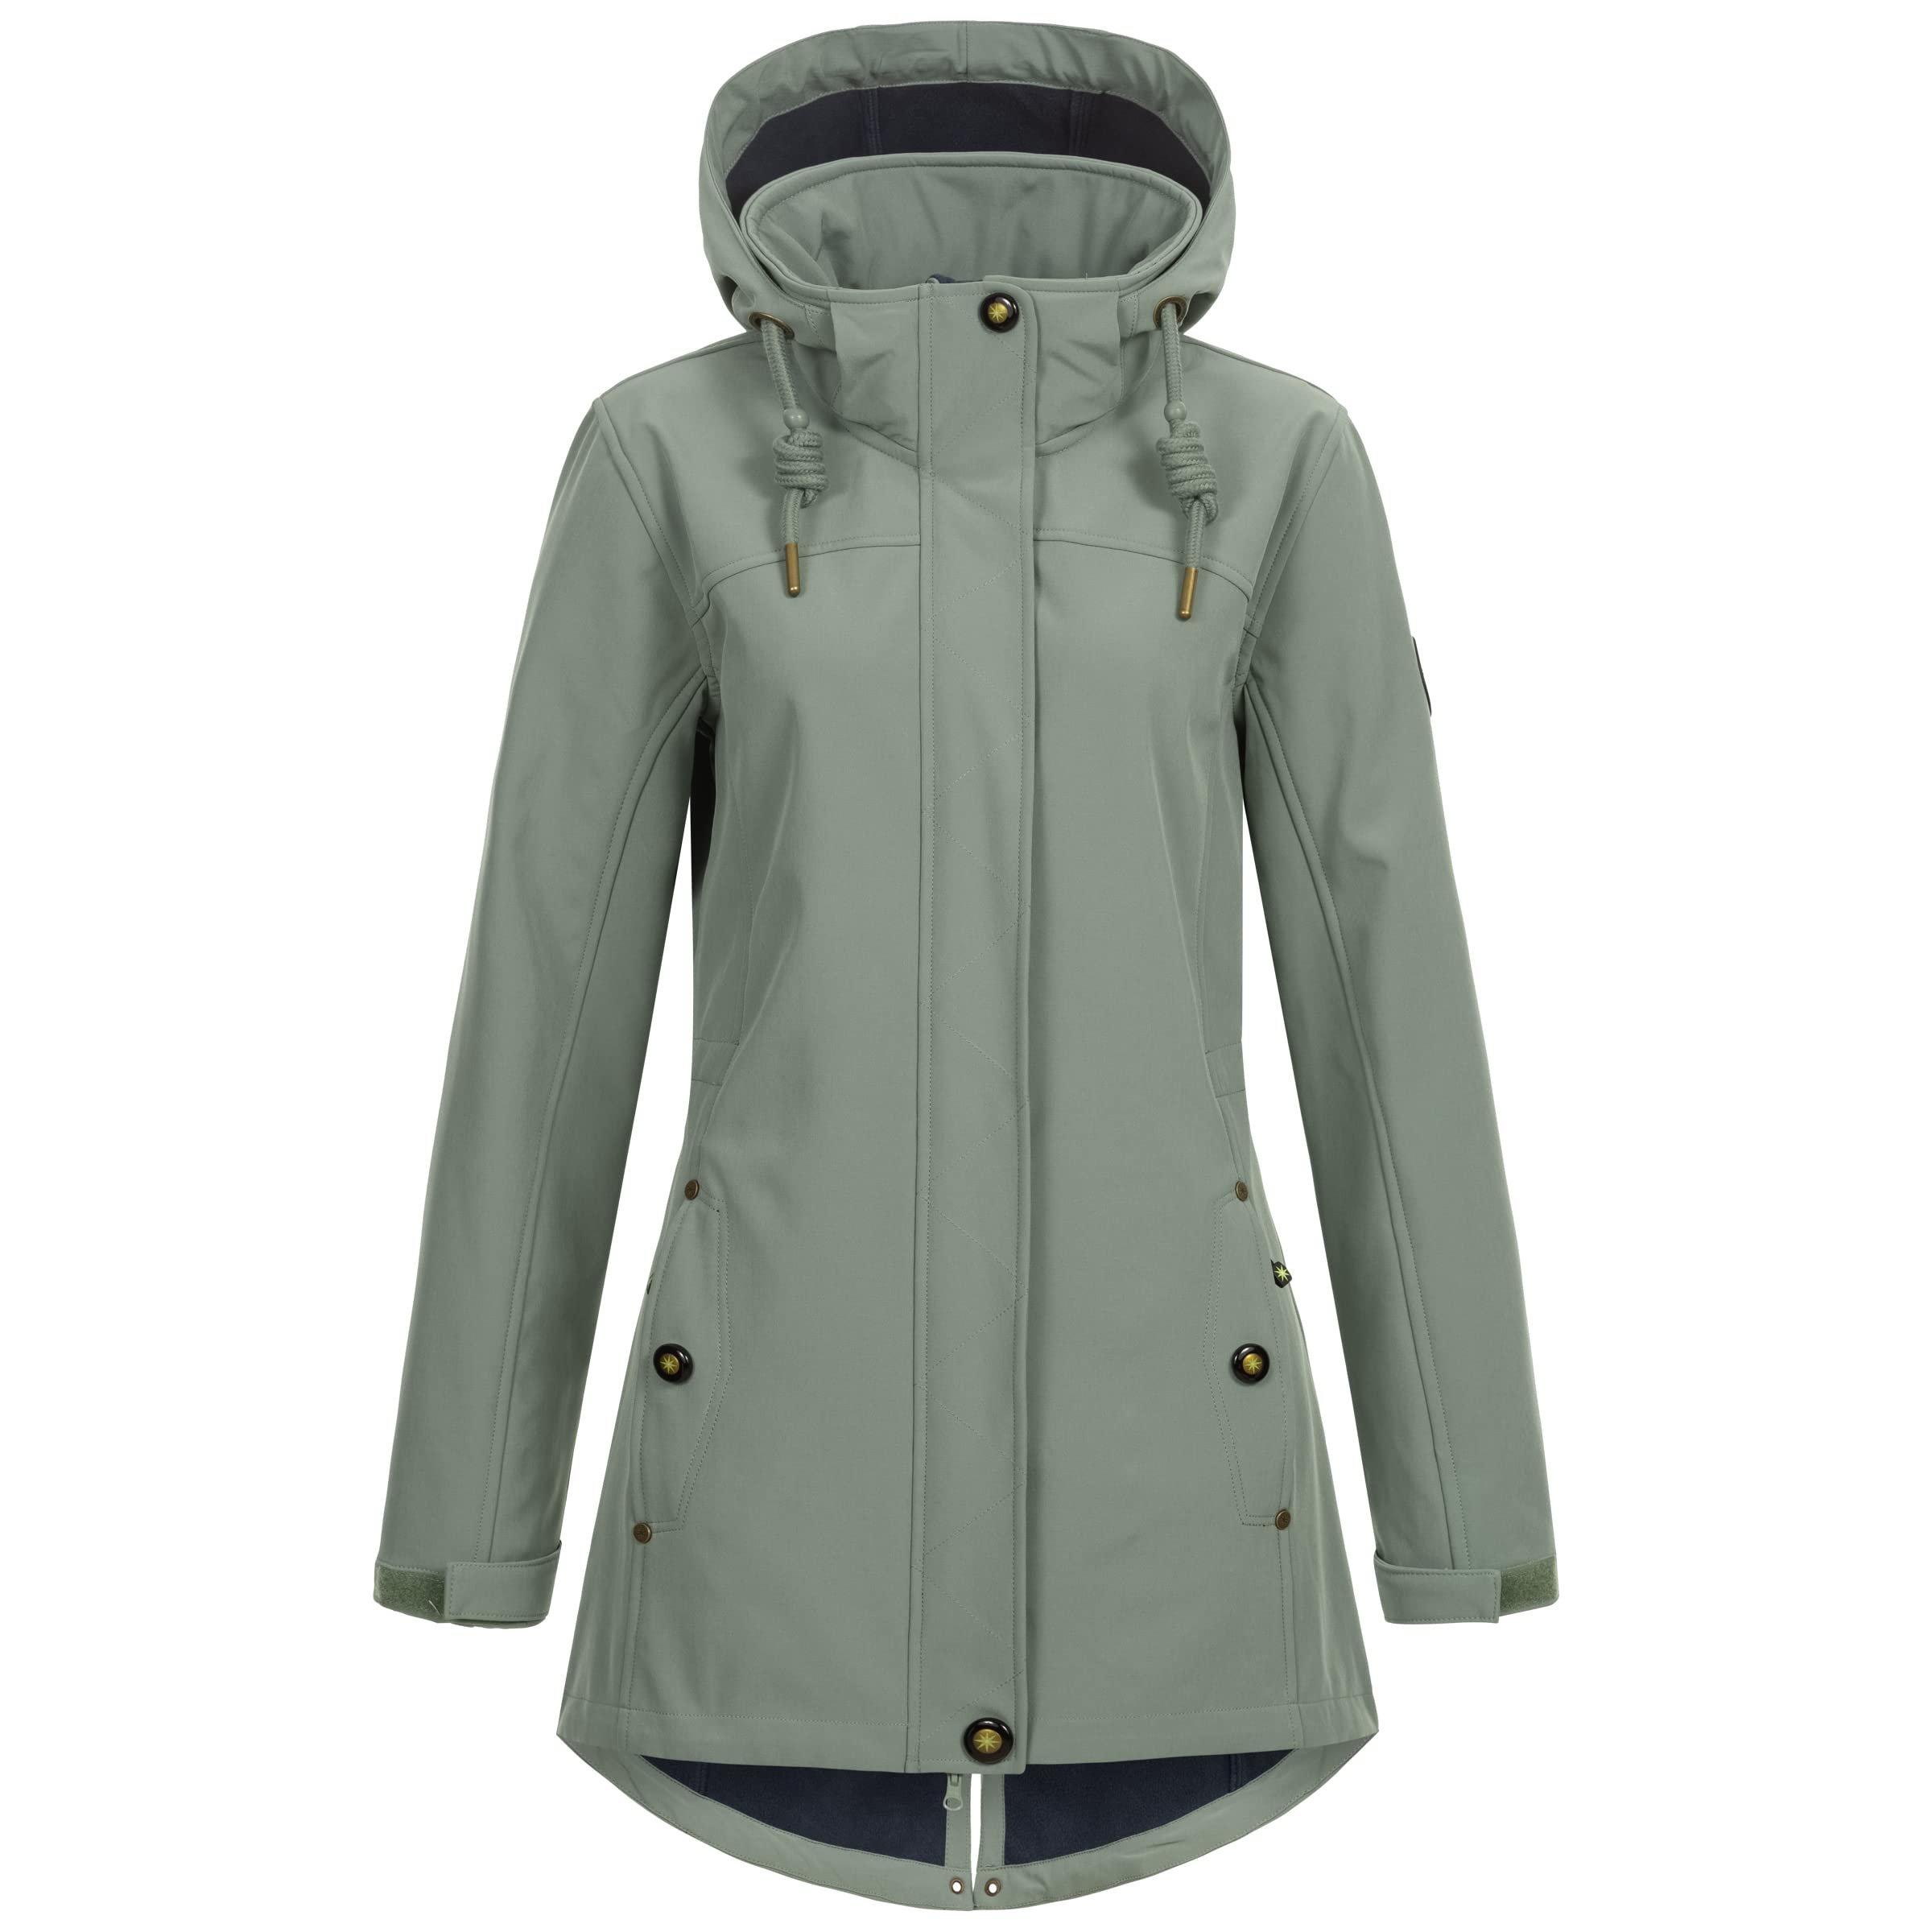 Ankerglut Damen Women's Coat Short Coat With Hood Lined Jacket Transition Jacket #Anker Glutbree Softshelljacke, slate gray, 44 EU